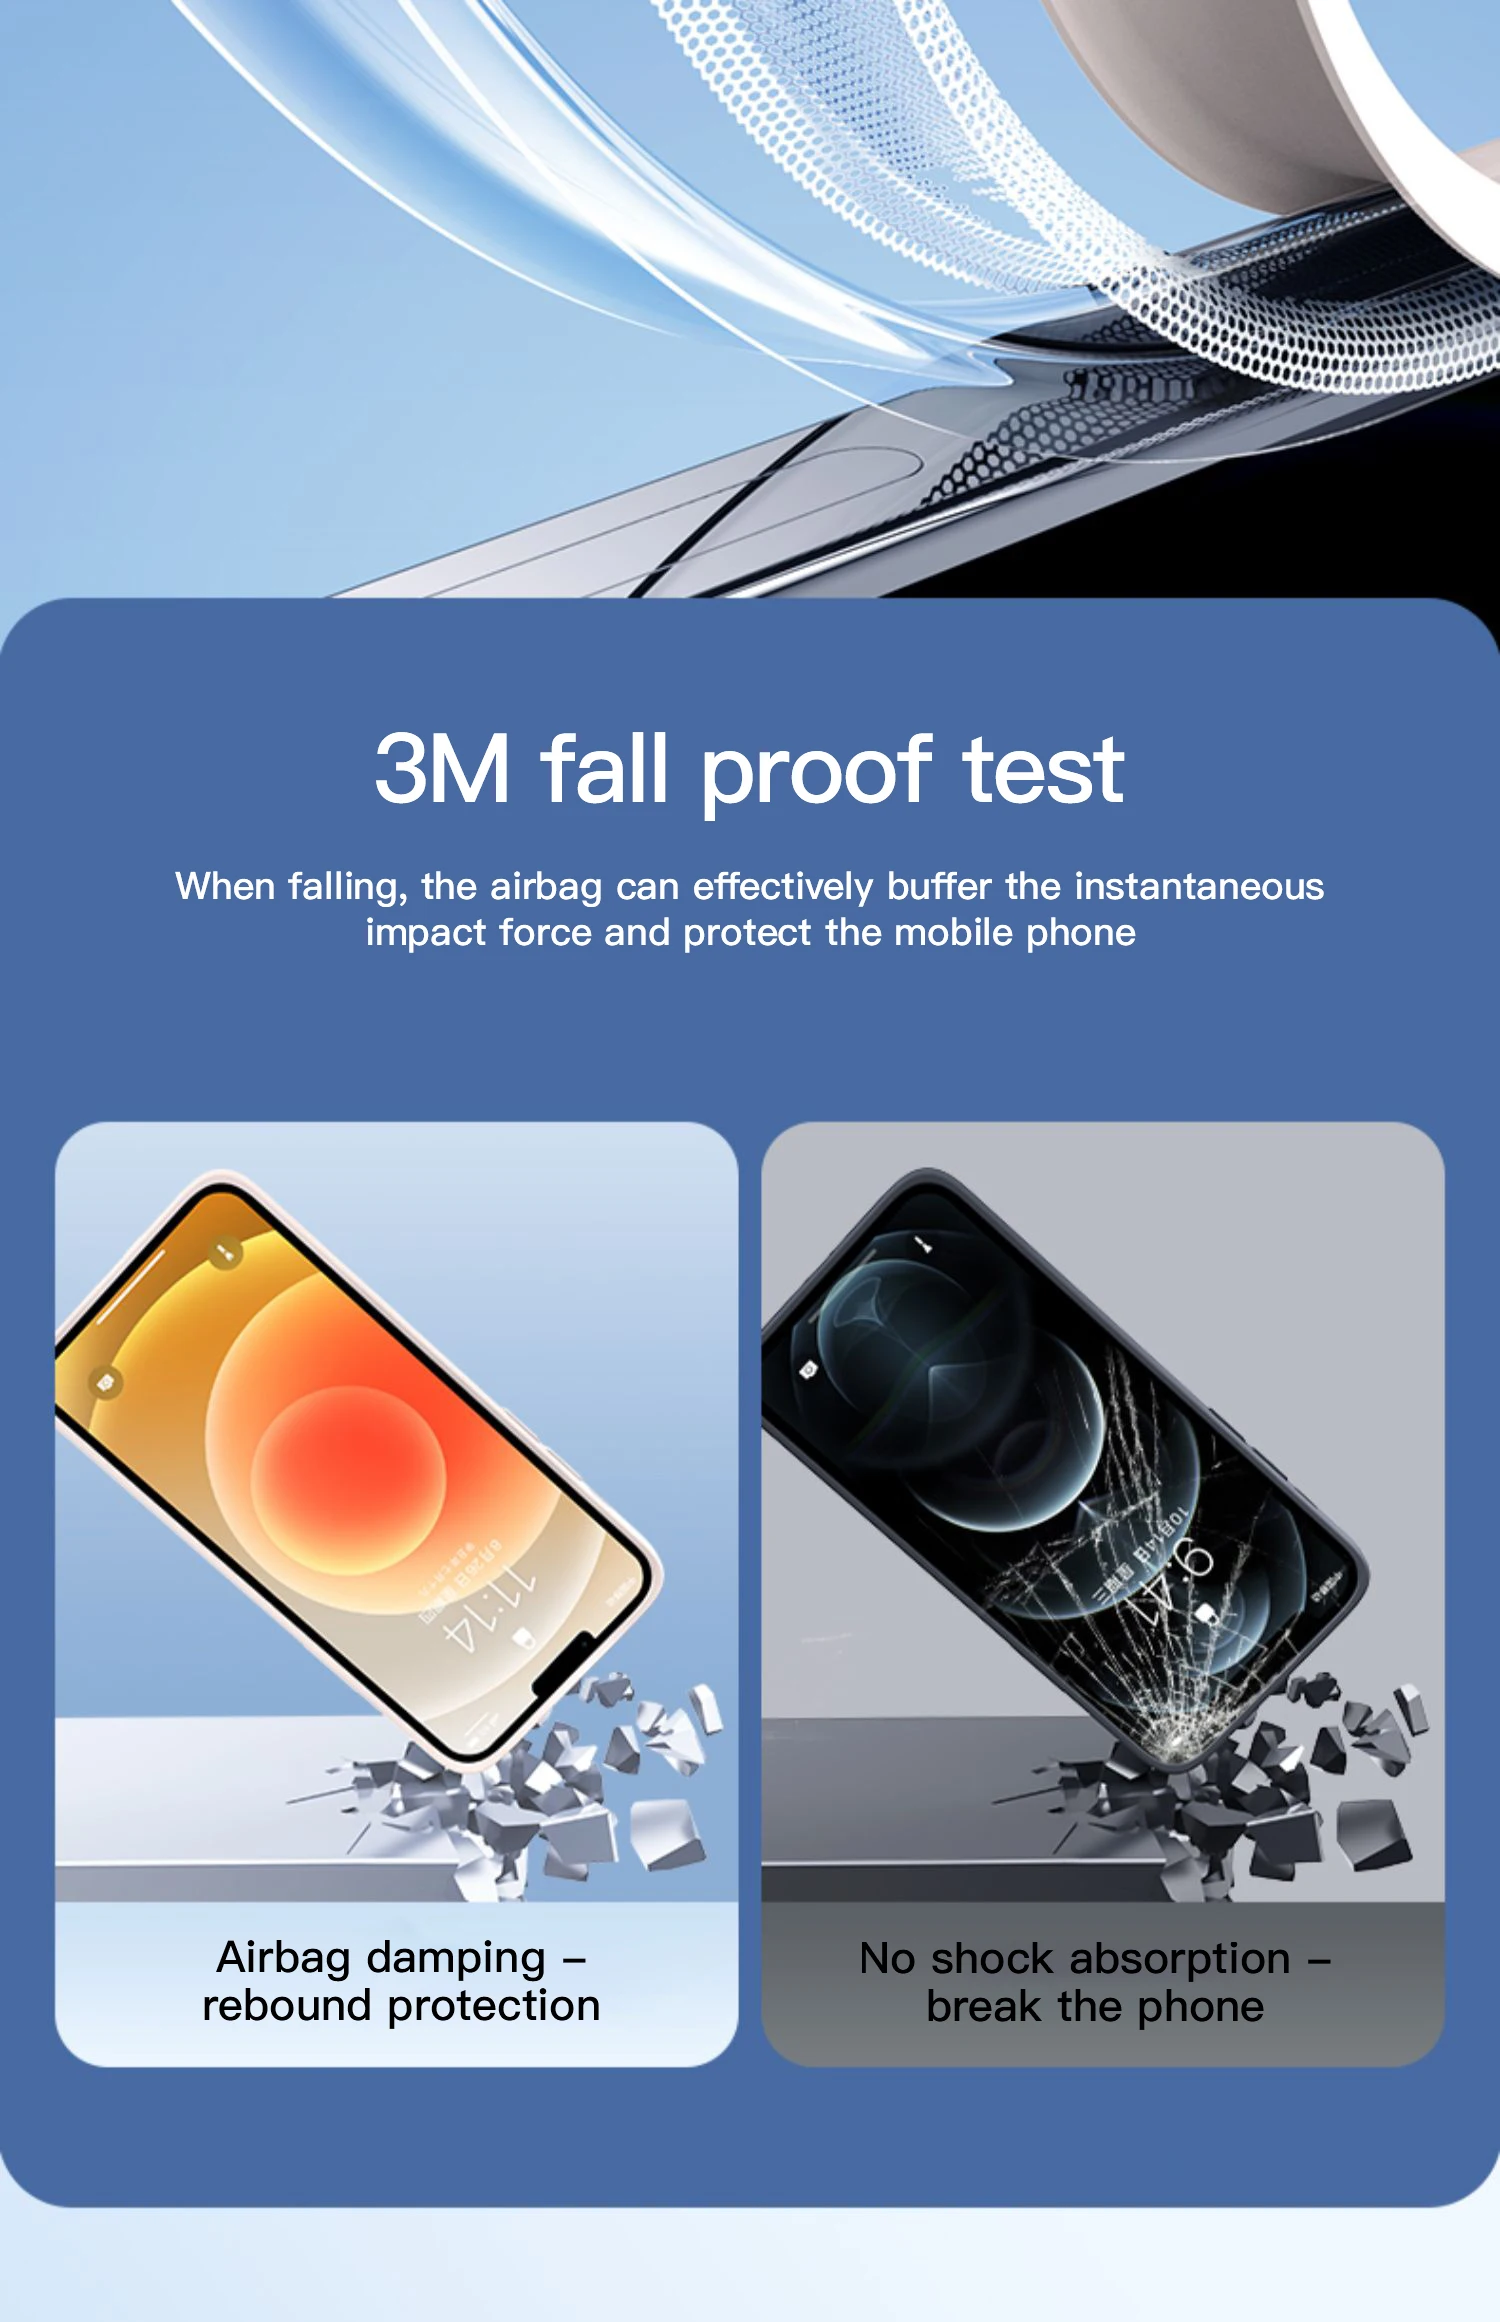 Official Original Square Liquid Silicone Case for iPhone 11 12 13 Pro Max Mini X XR XS Max 7 8 Plus Lens Protection Cover Funda best iphone 13 case